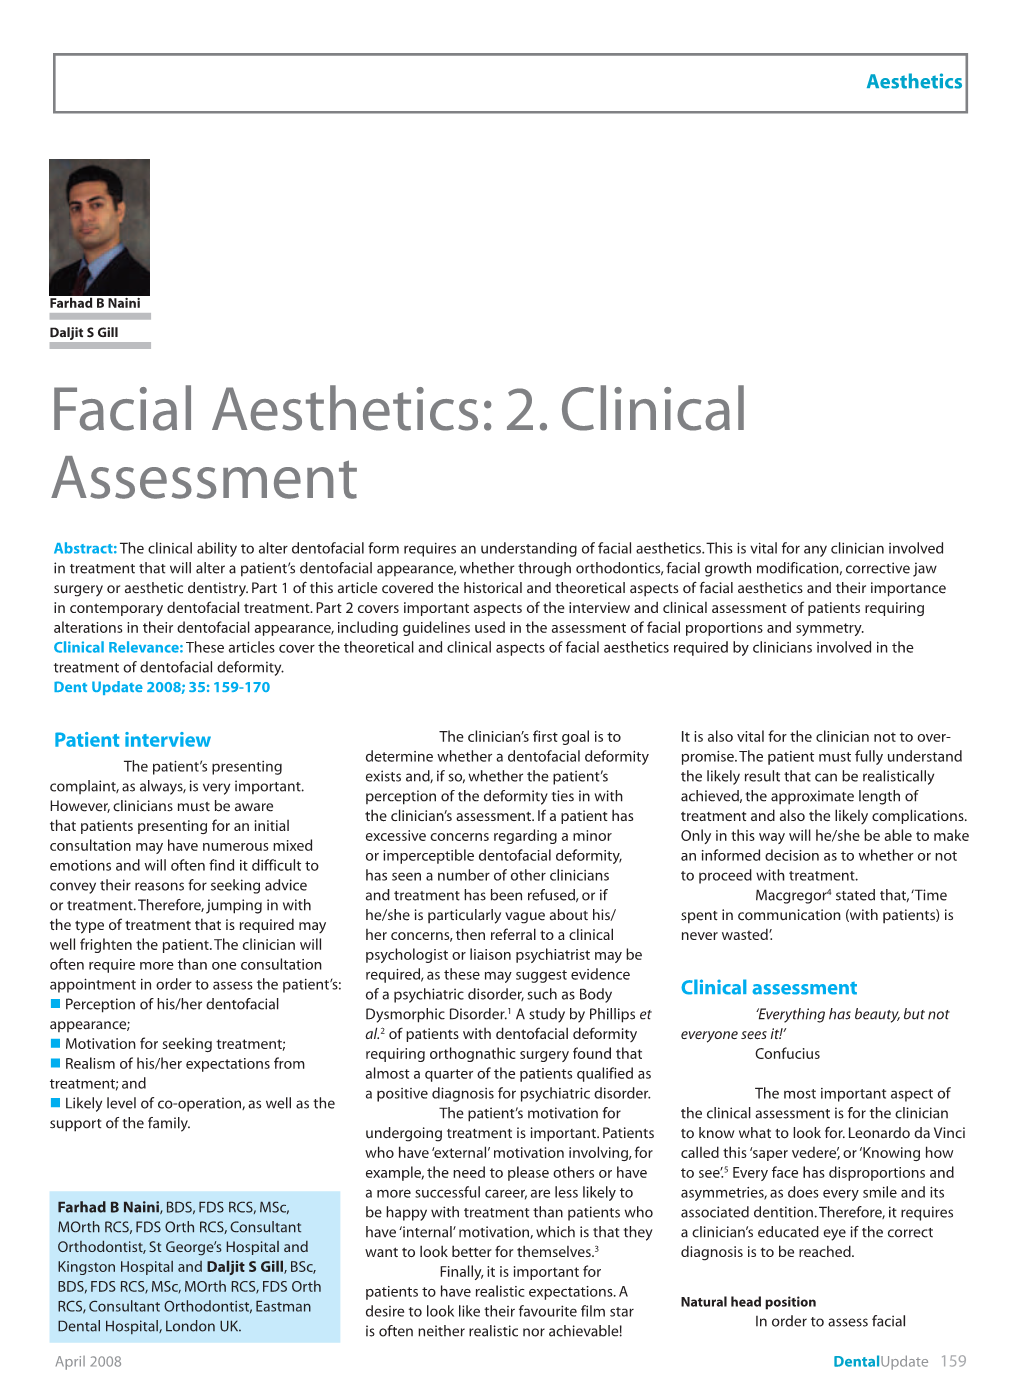 Facial Aesthetics: 2. Clinical Assessment